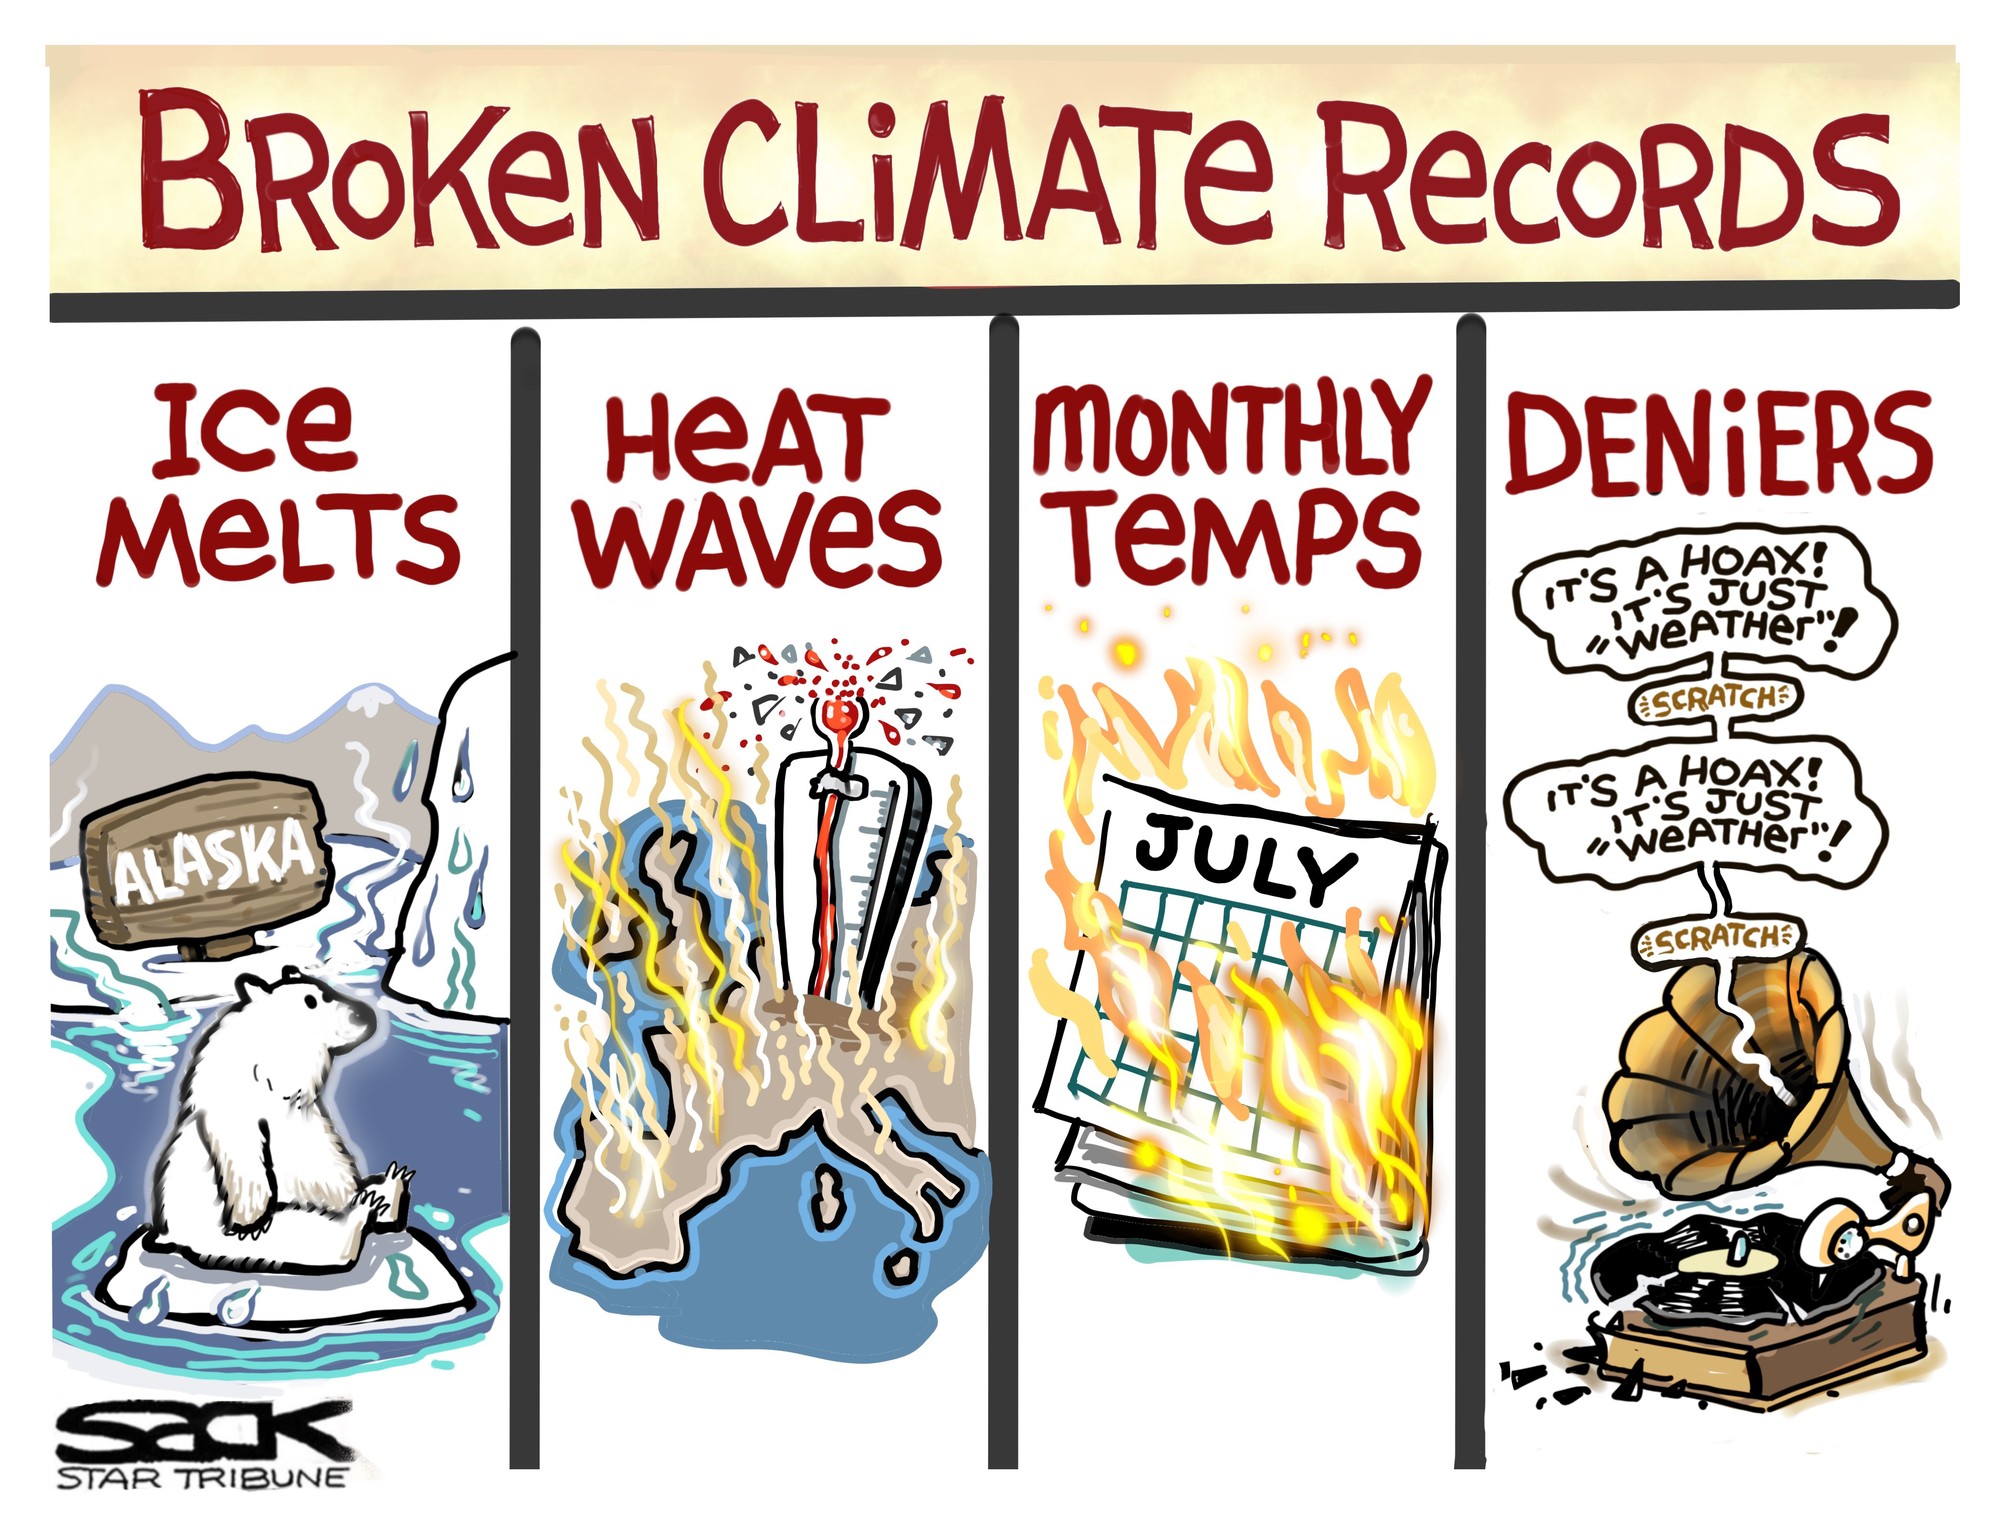 Sack cartoon: Climate change deniers